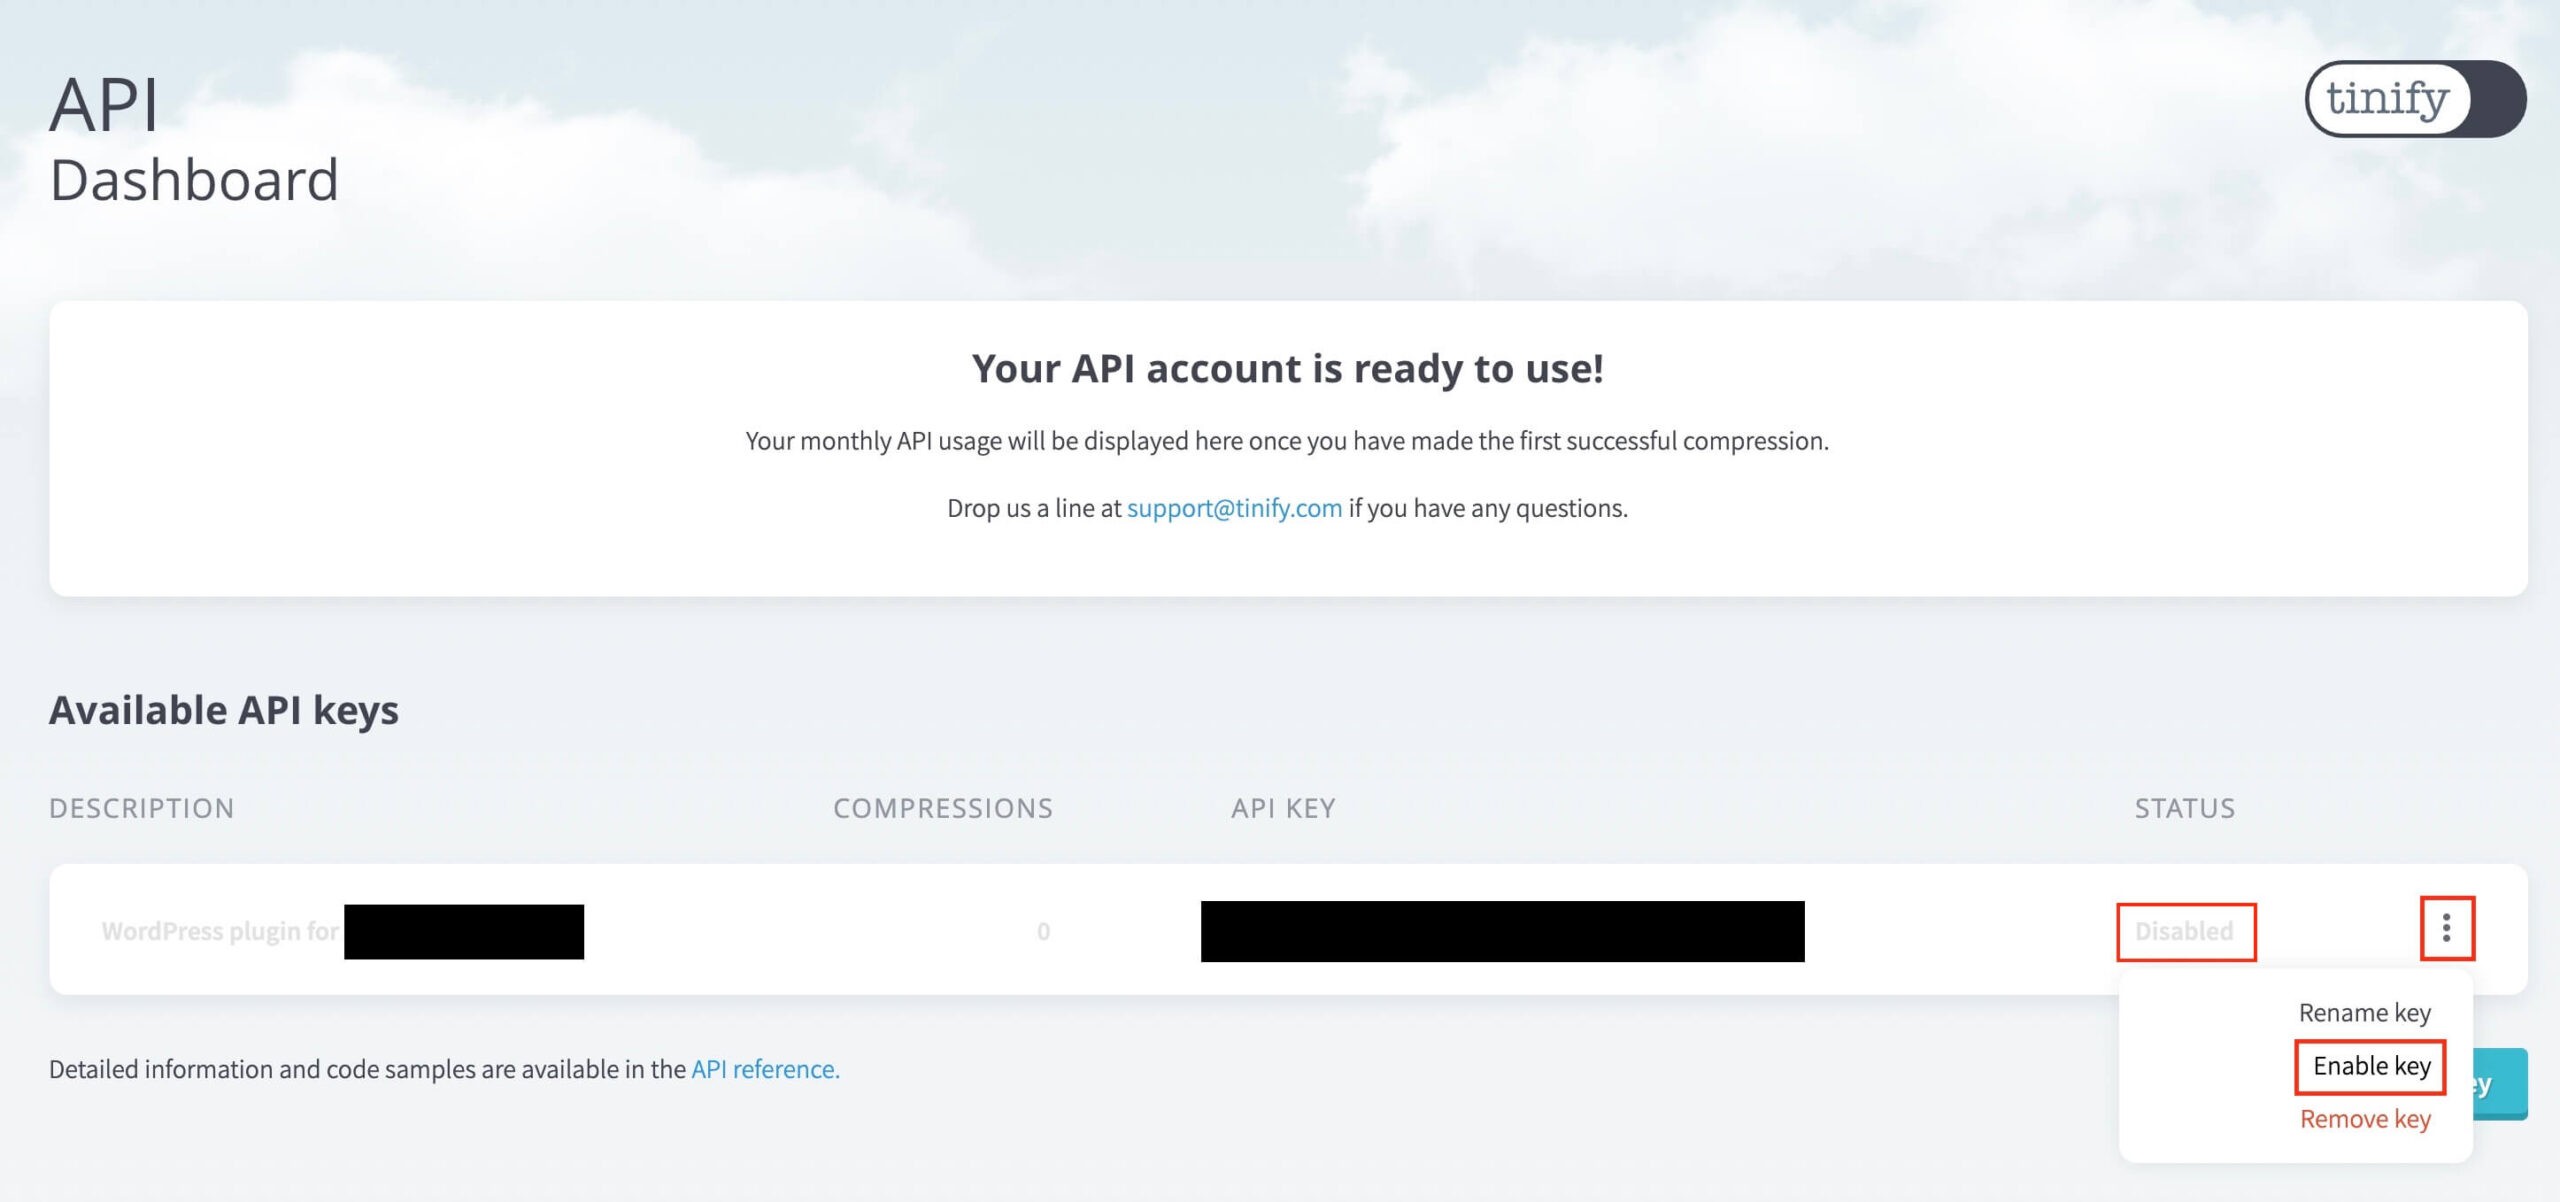 API Dashboard：『Enable key』をクリック